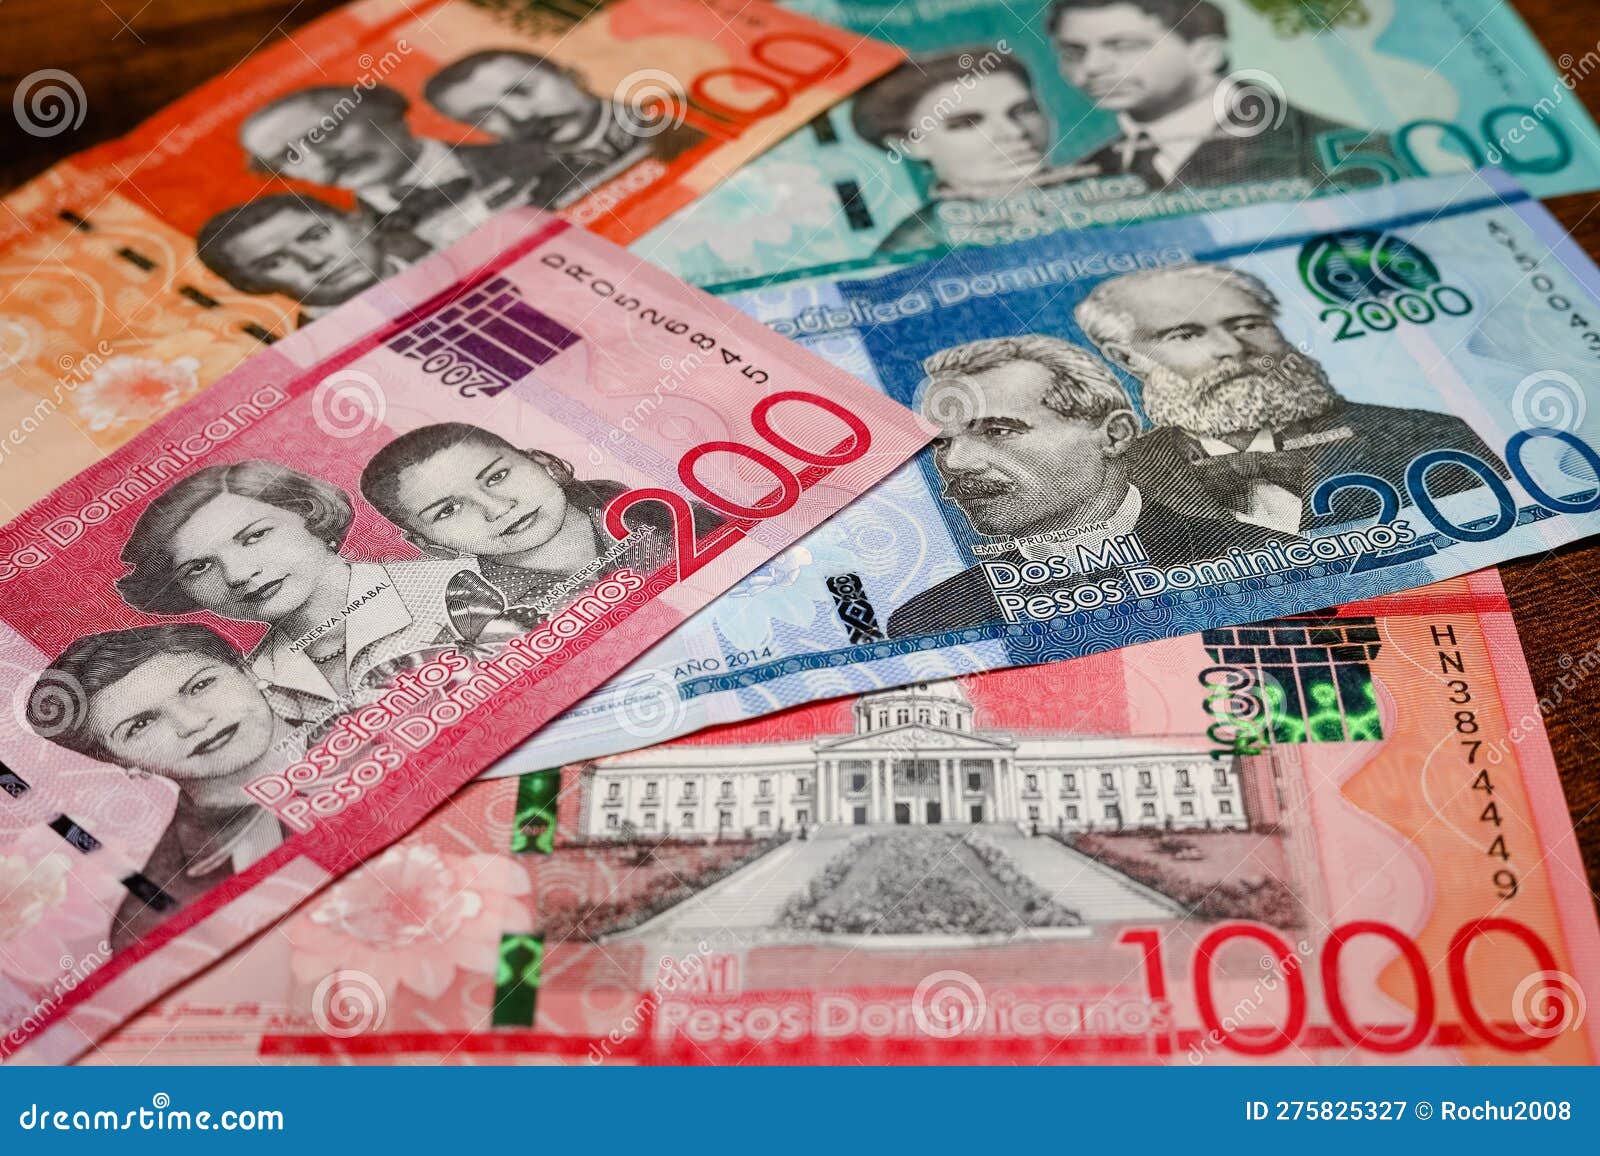 Dominican Republic Money, Pesos Currency, Various Denominations, Close